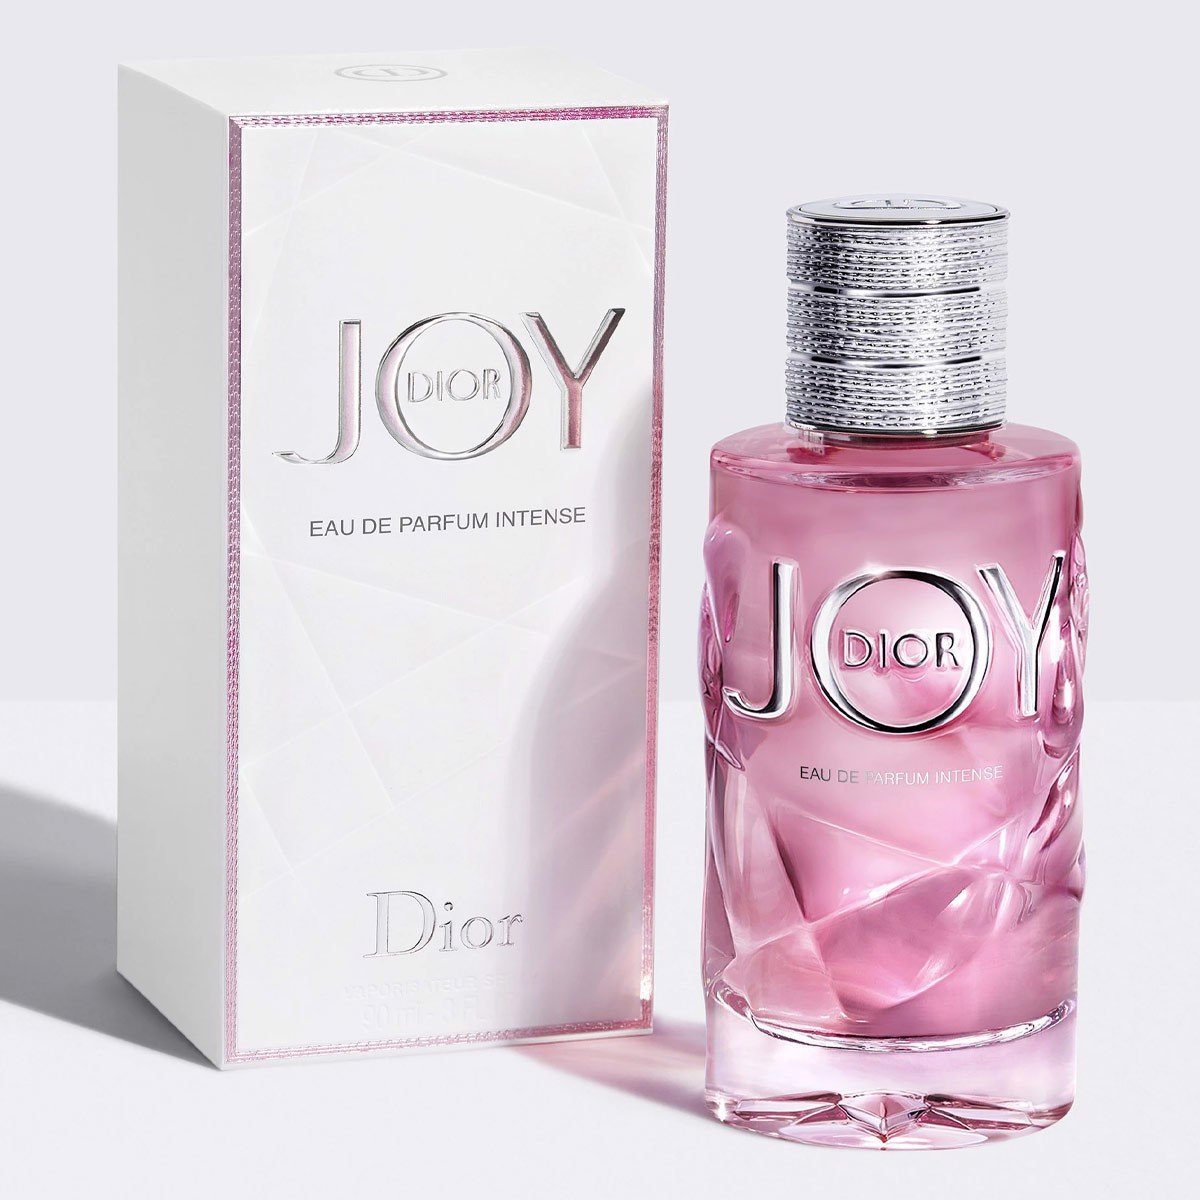 Dior Joy Eau de Parfume Intense 50ML